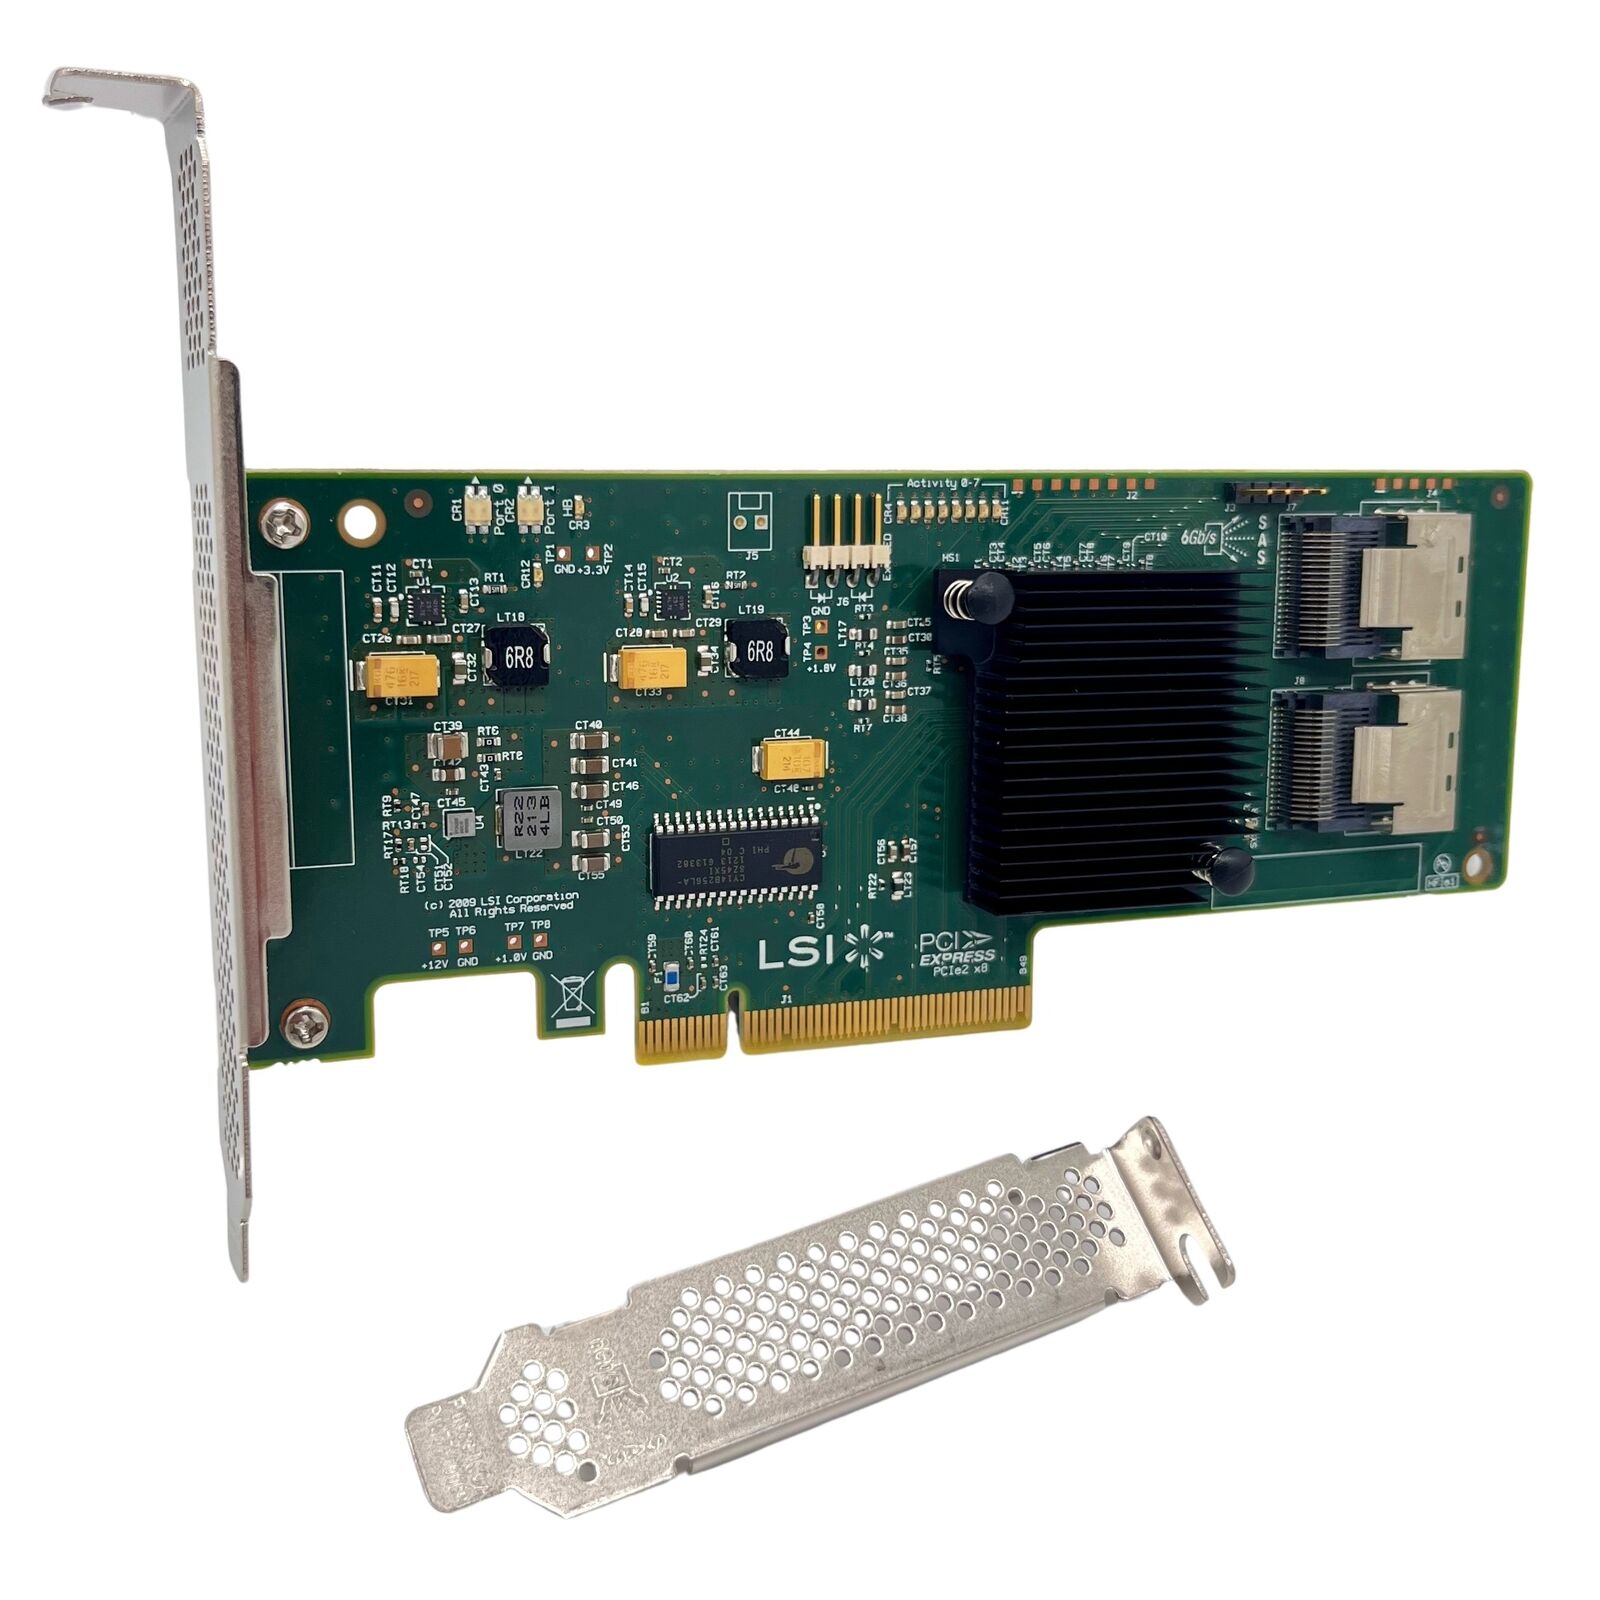 LSI 9211-8i IT Mode HBA SAS SATA 6Gbps 8 Port PCI-e 2.0 x8 TrueNAS unRAID ZFS